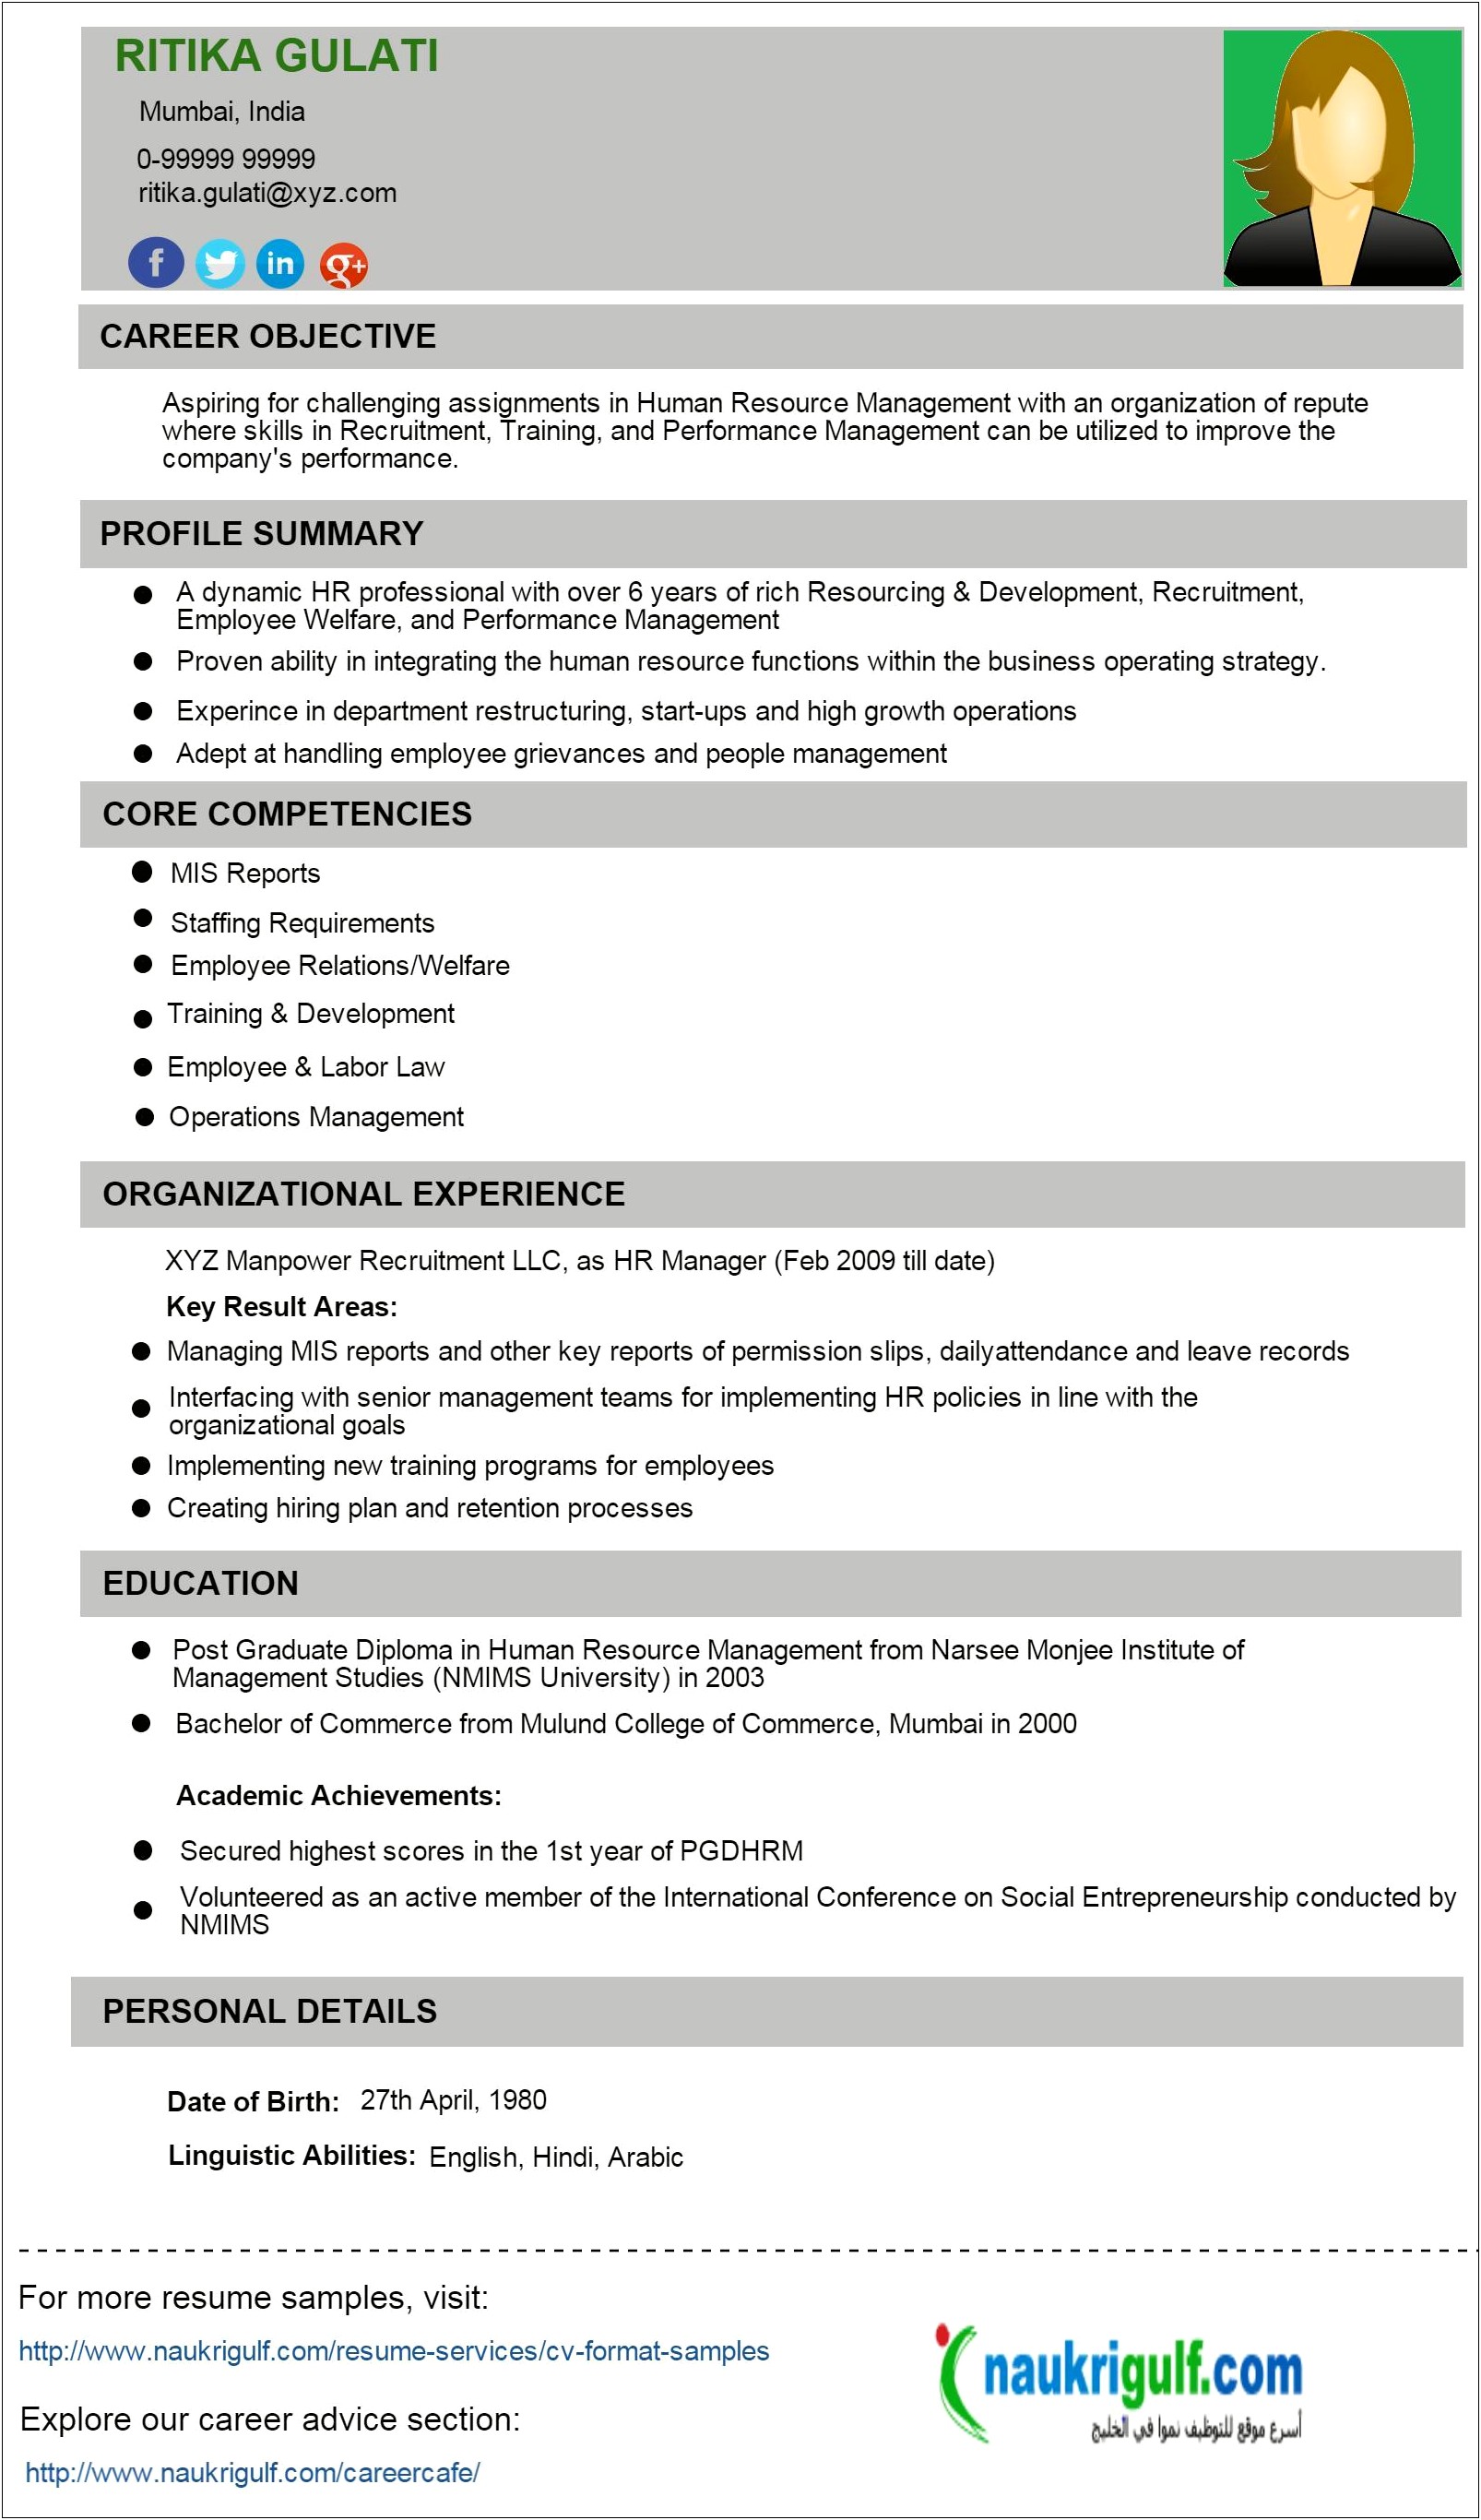 Resume Format Samples For Job Application